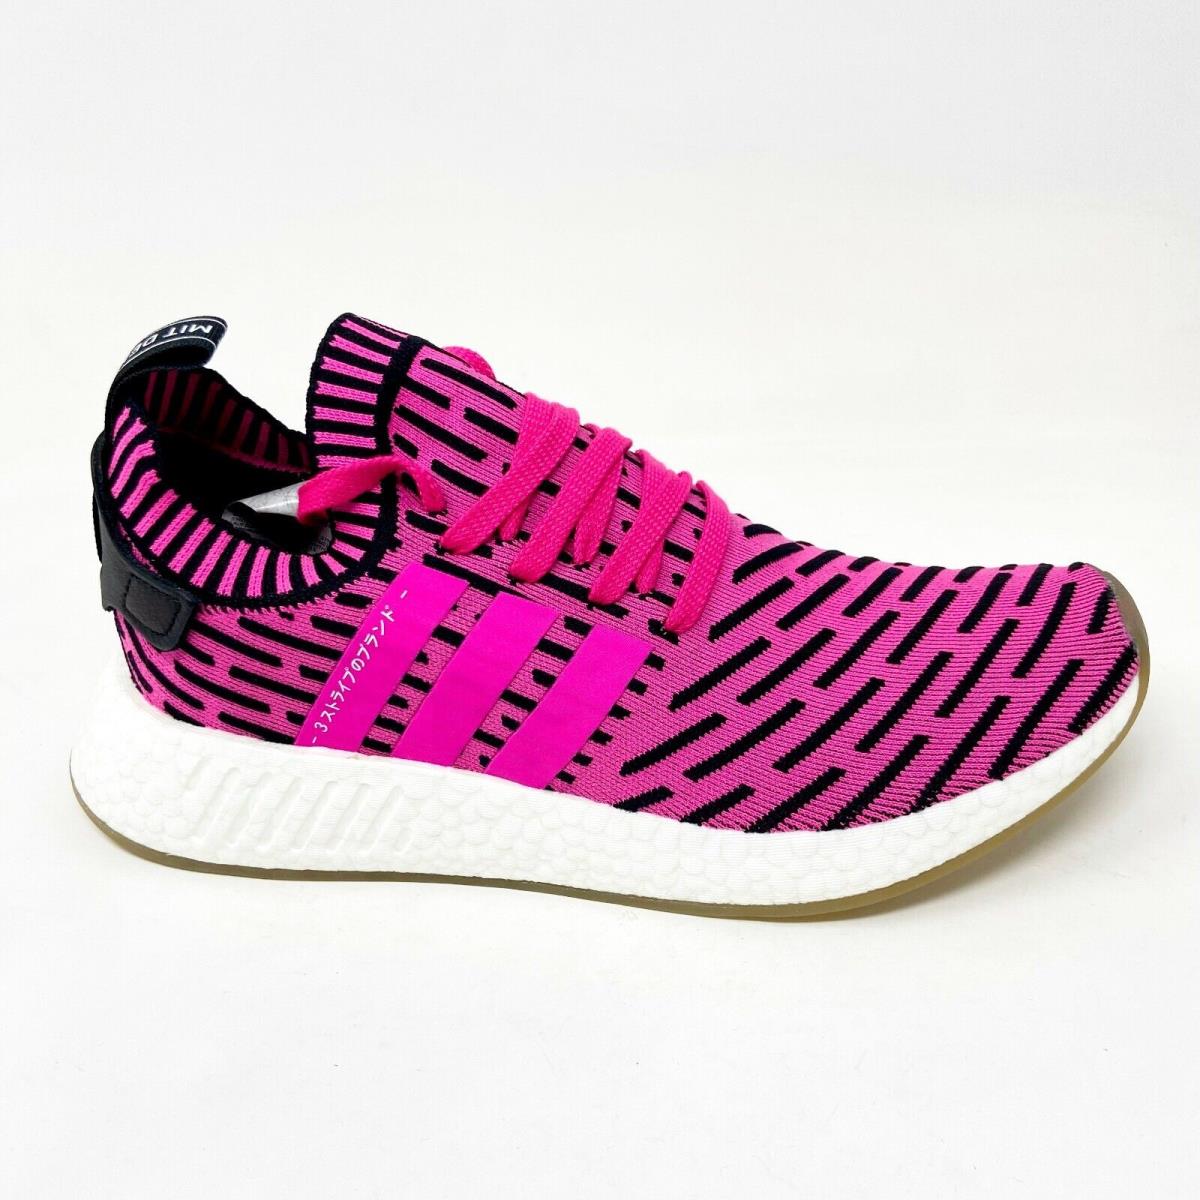 Adidas Nmd R2 PK Primeknit Japan Shock Pink Black Mens Size 9.5 Sneakers BY9697